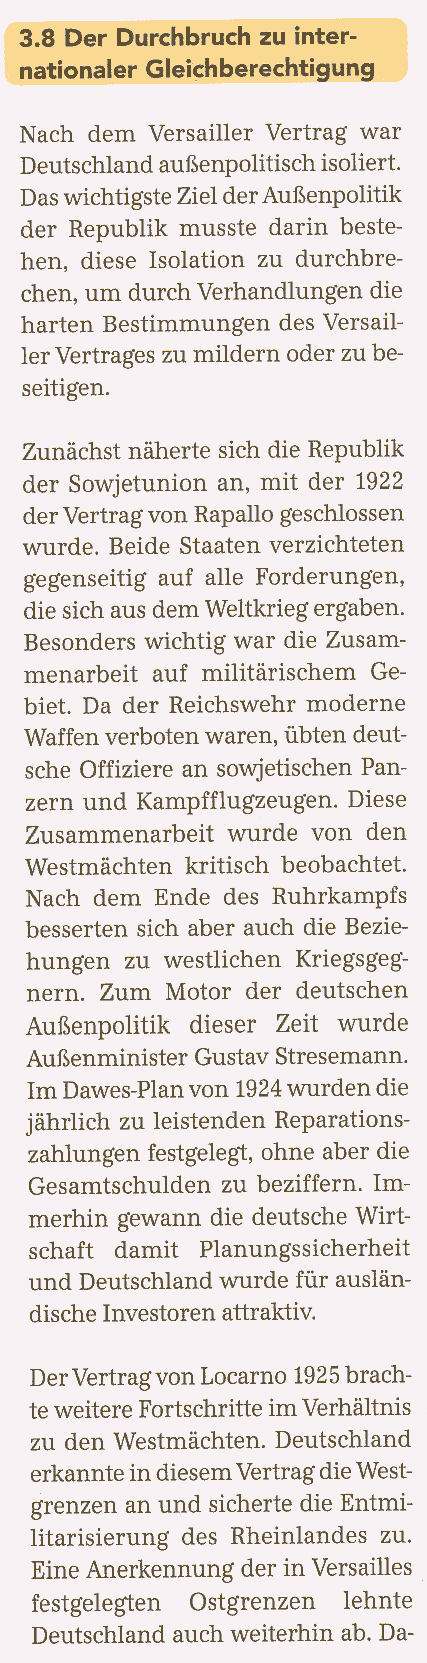 Stresemann_Aussenpolitik_01